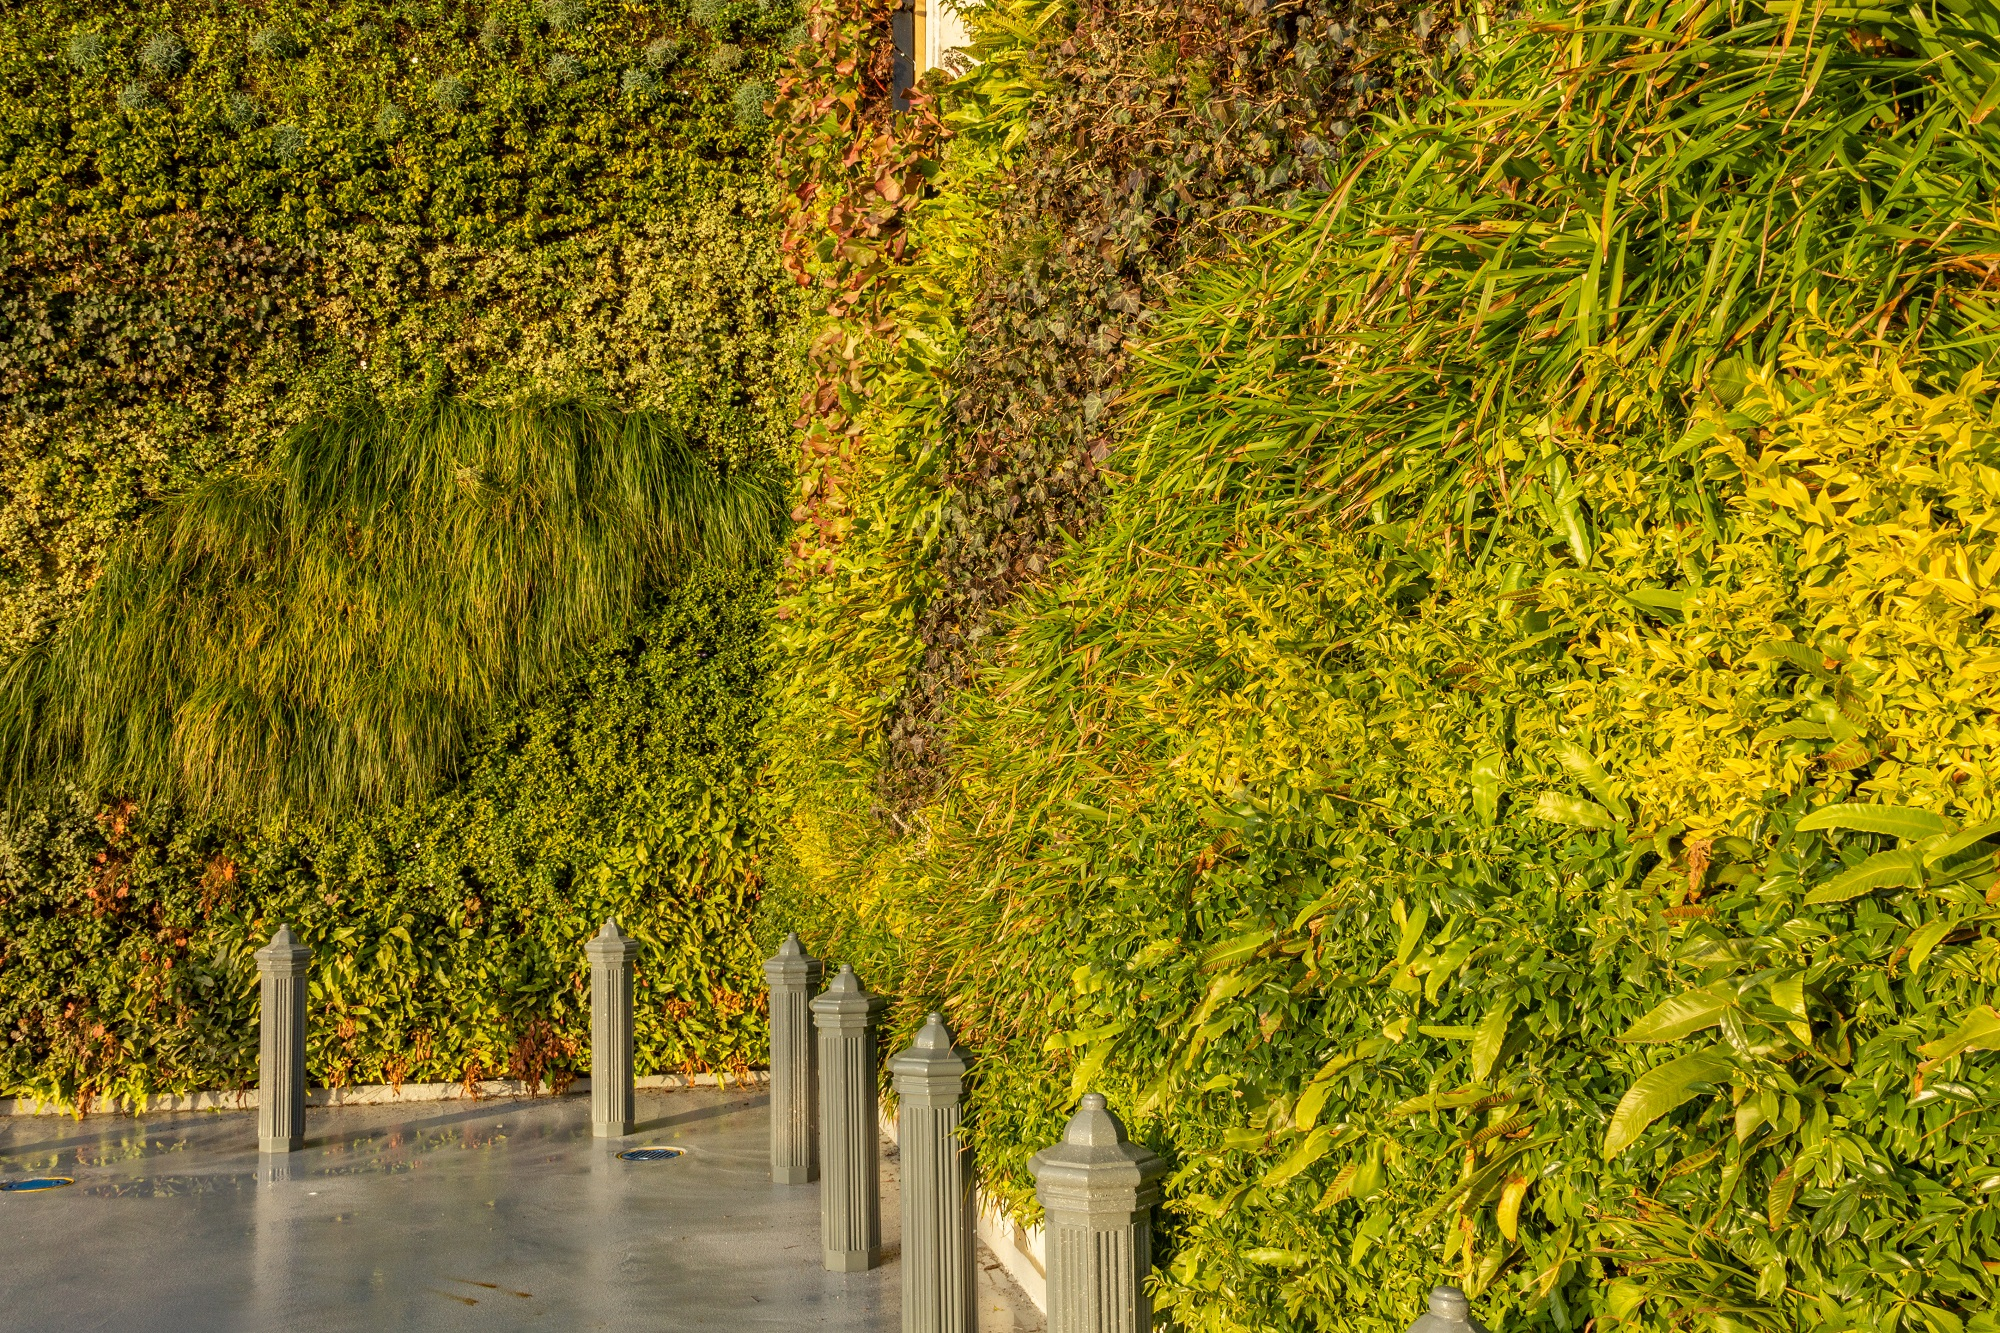 the planting in a natural green wall at a car park